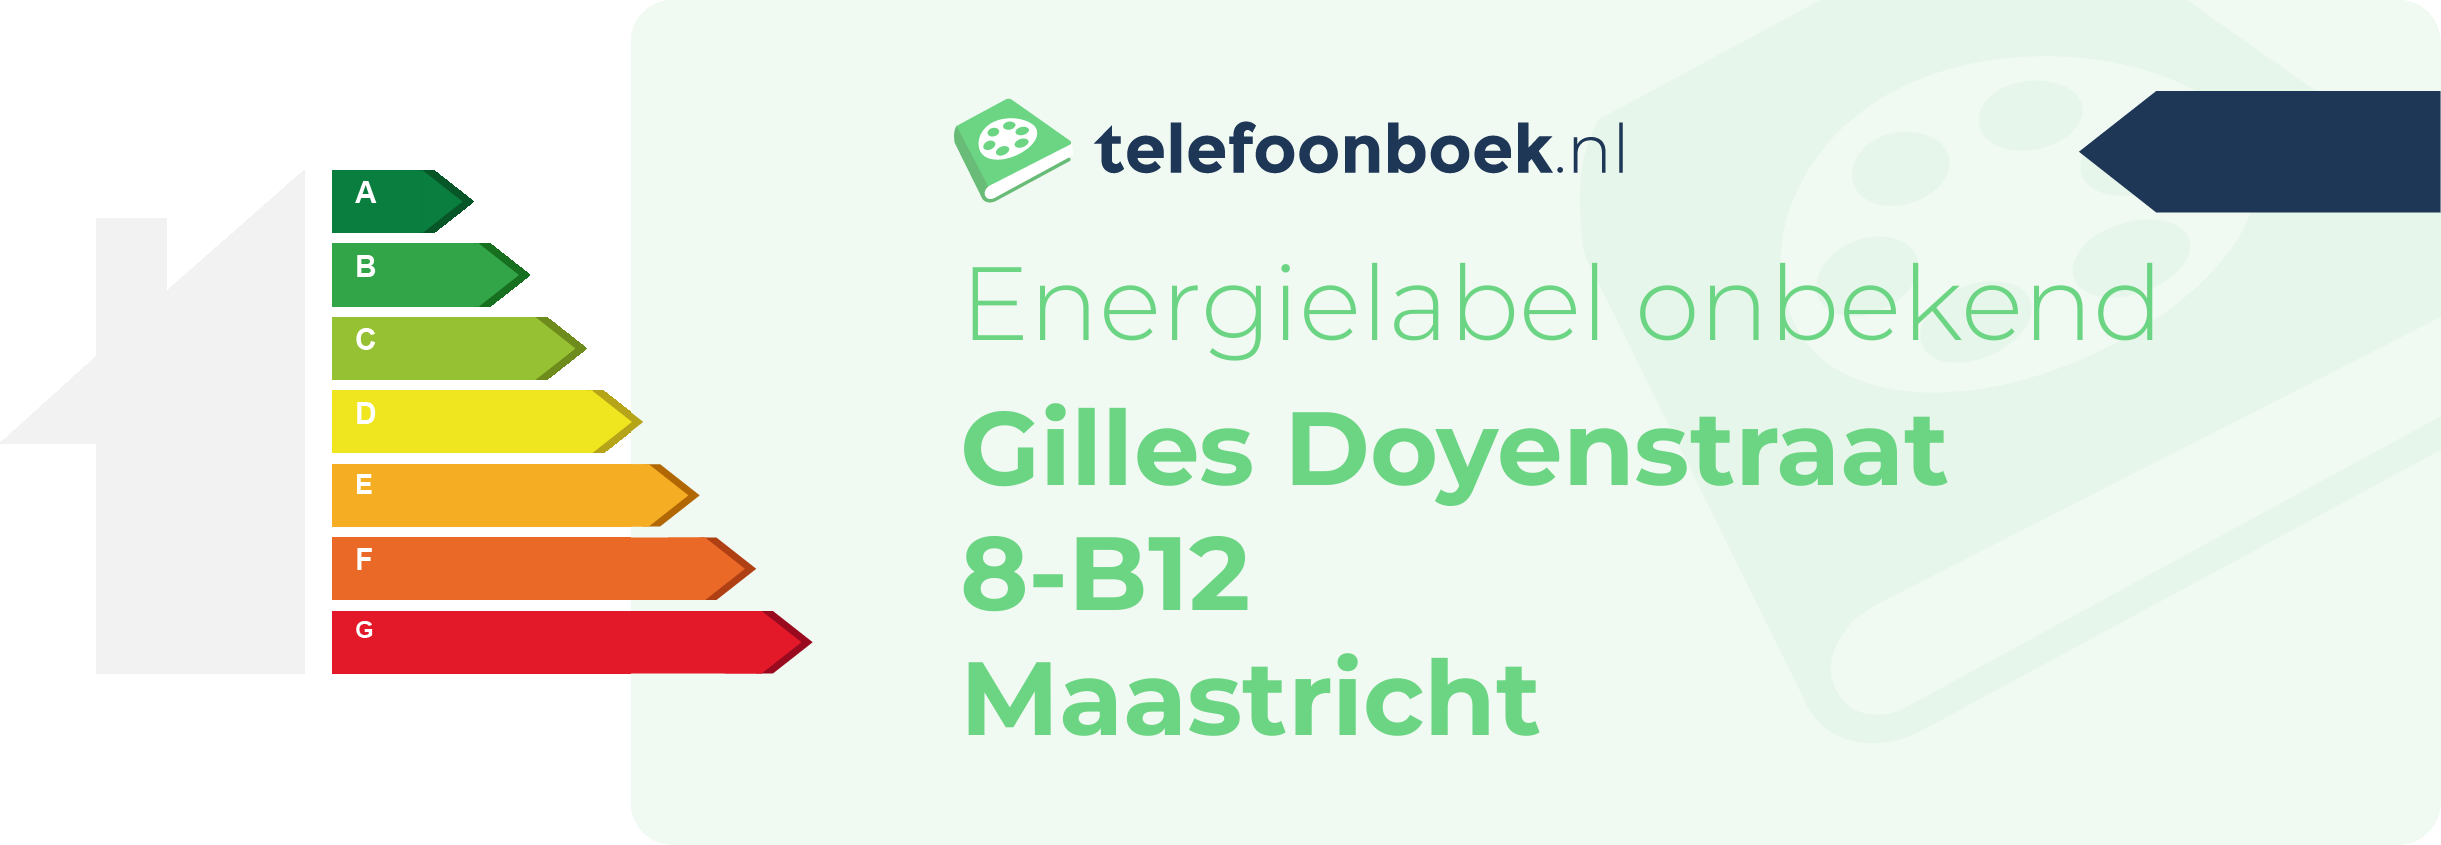 Energielabel Gilles Doyenstraat 8-B12 Maastricht